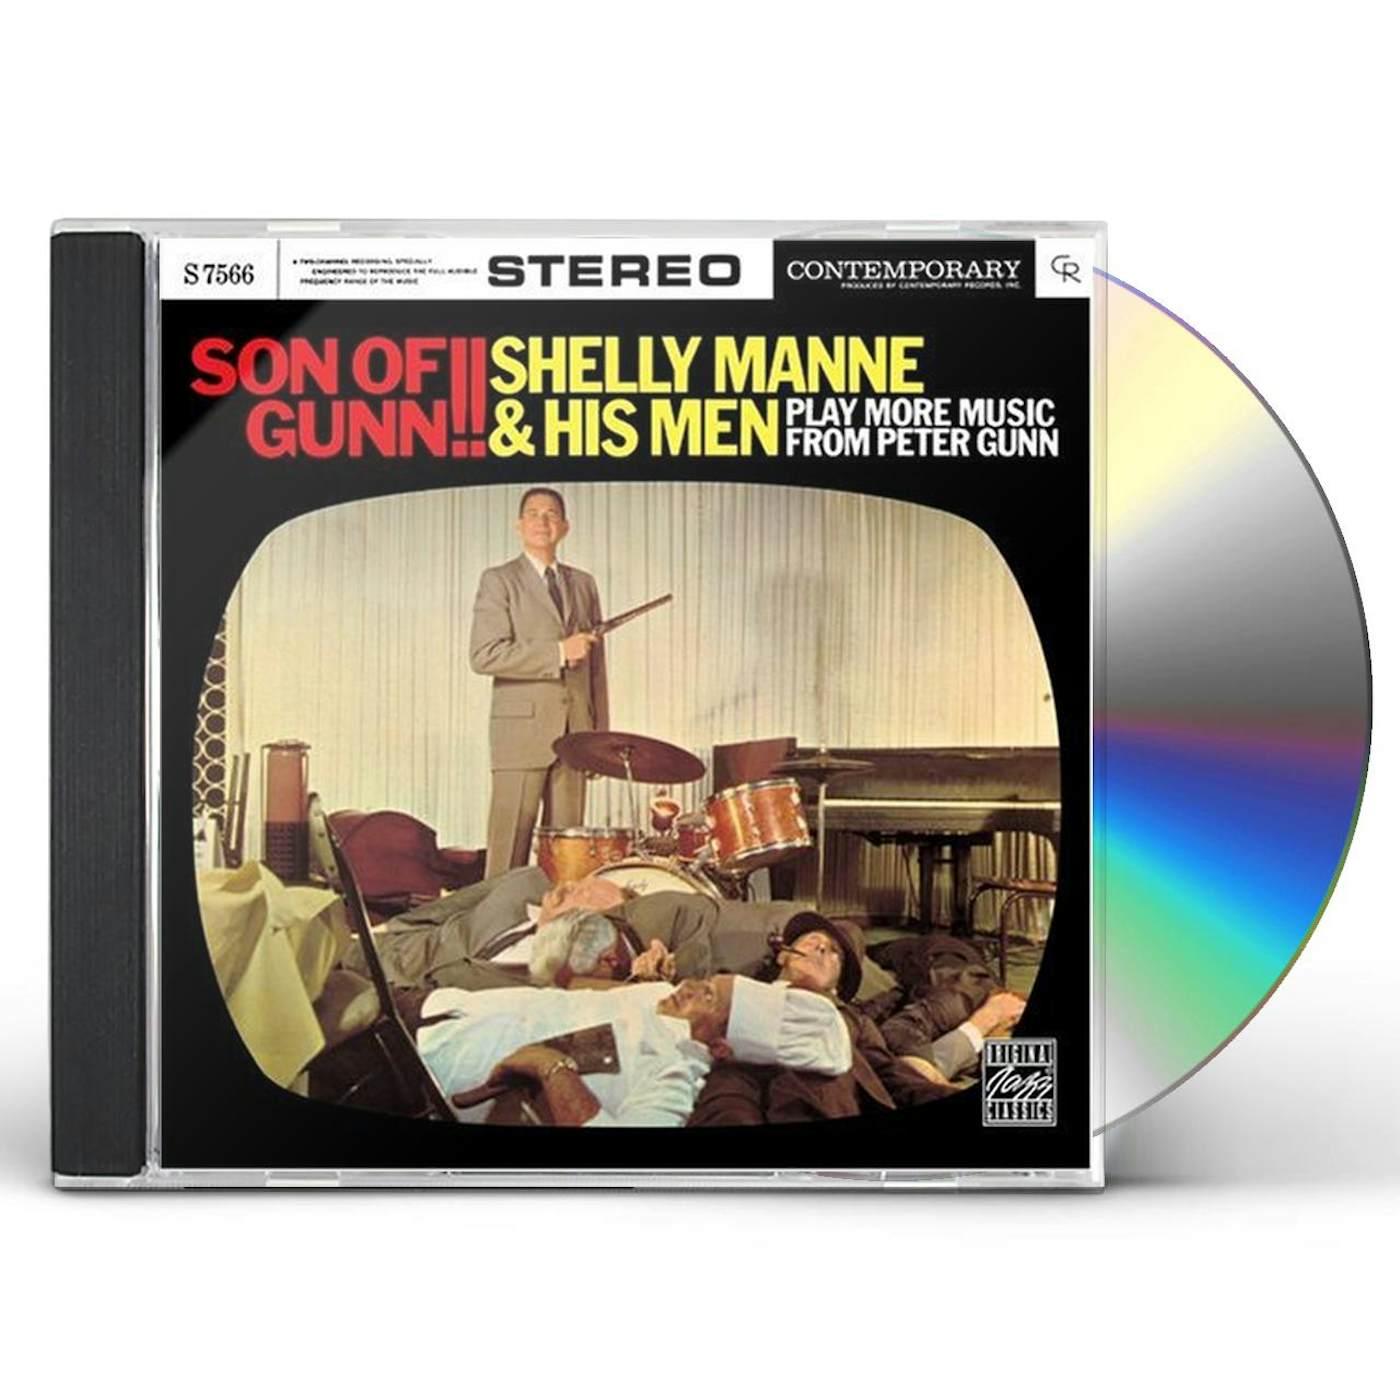 Shelly Manne & His Men PLAY MORE MUSIC FROM PETER GUNN - SON OF A GUNN CD